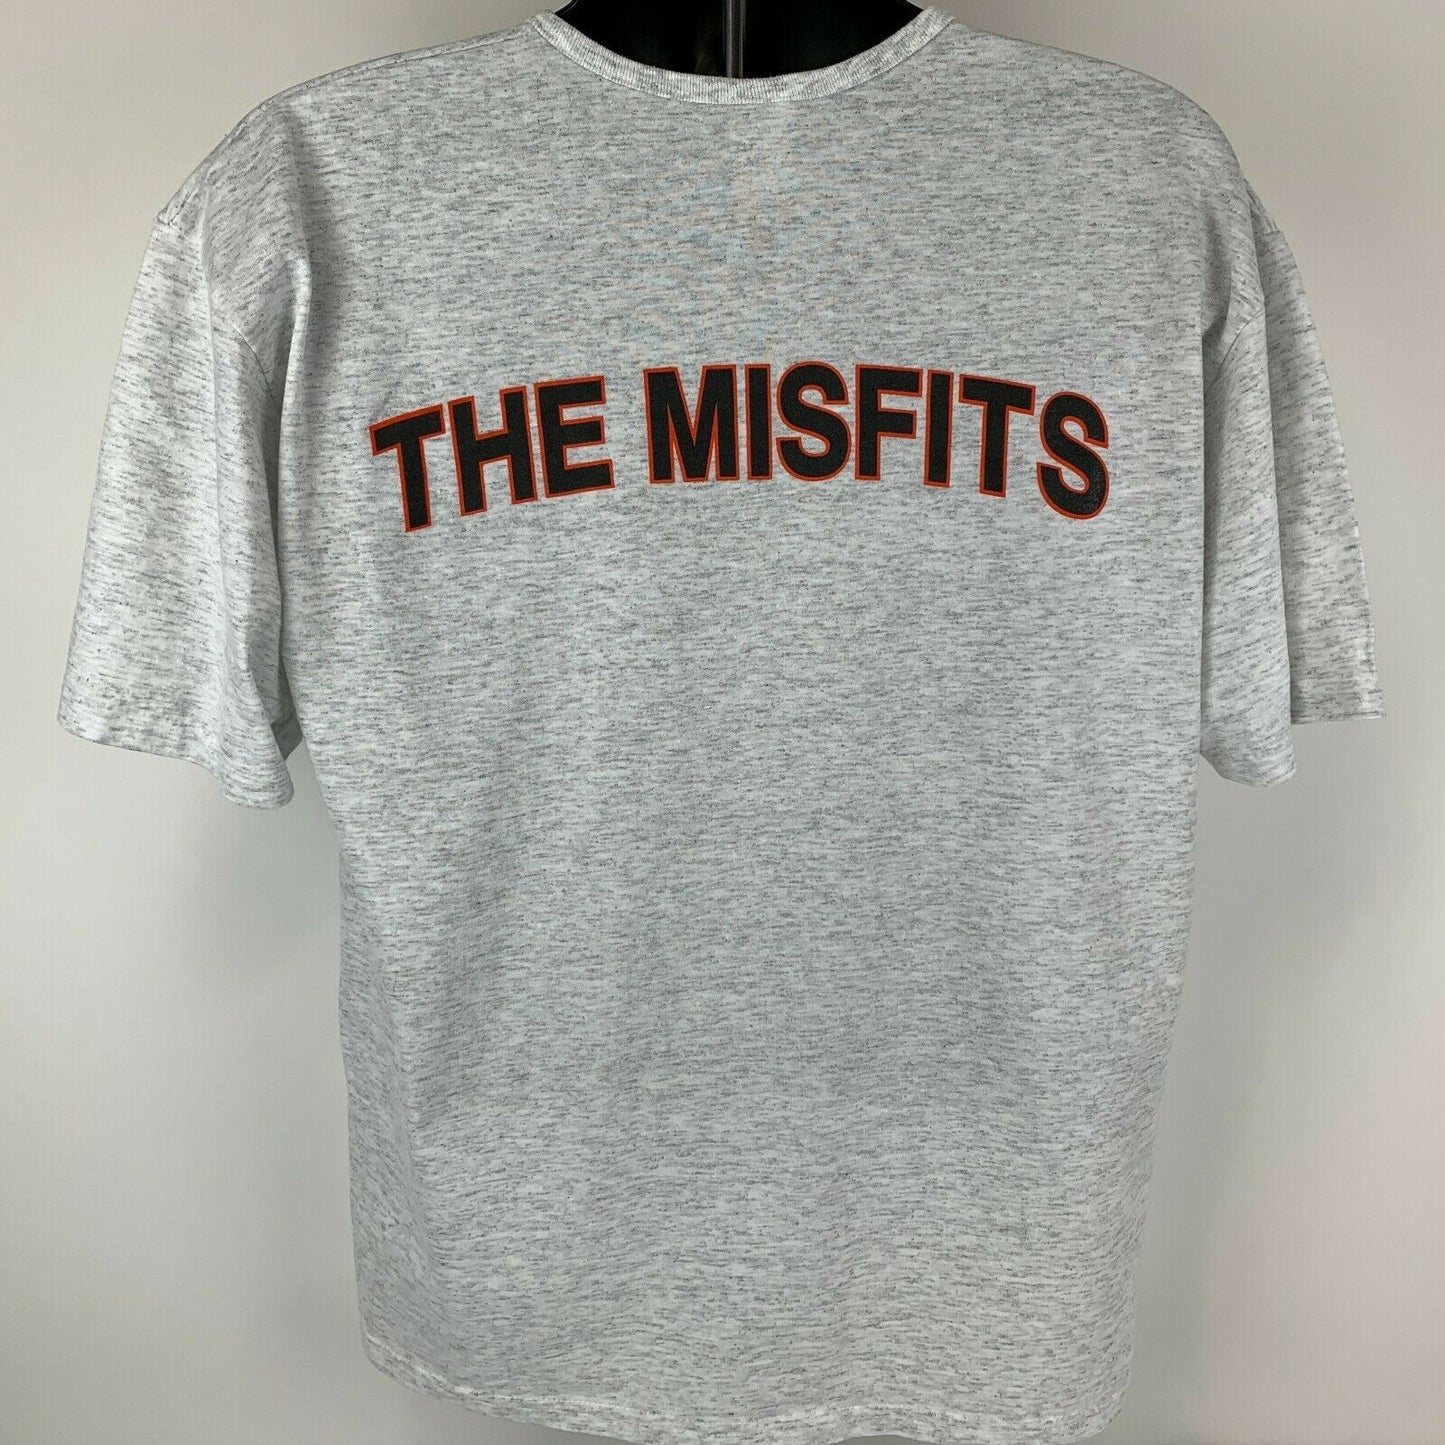 Vintage 1990s TWR Telecom Inc The Misfits XL X-Large T Shirt Houston Texas USA